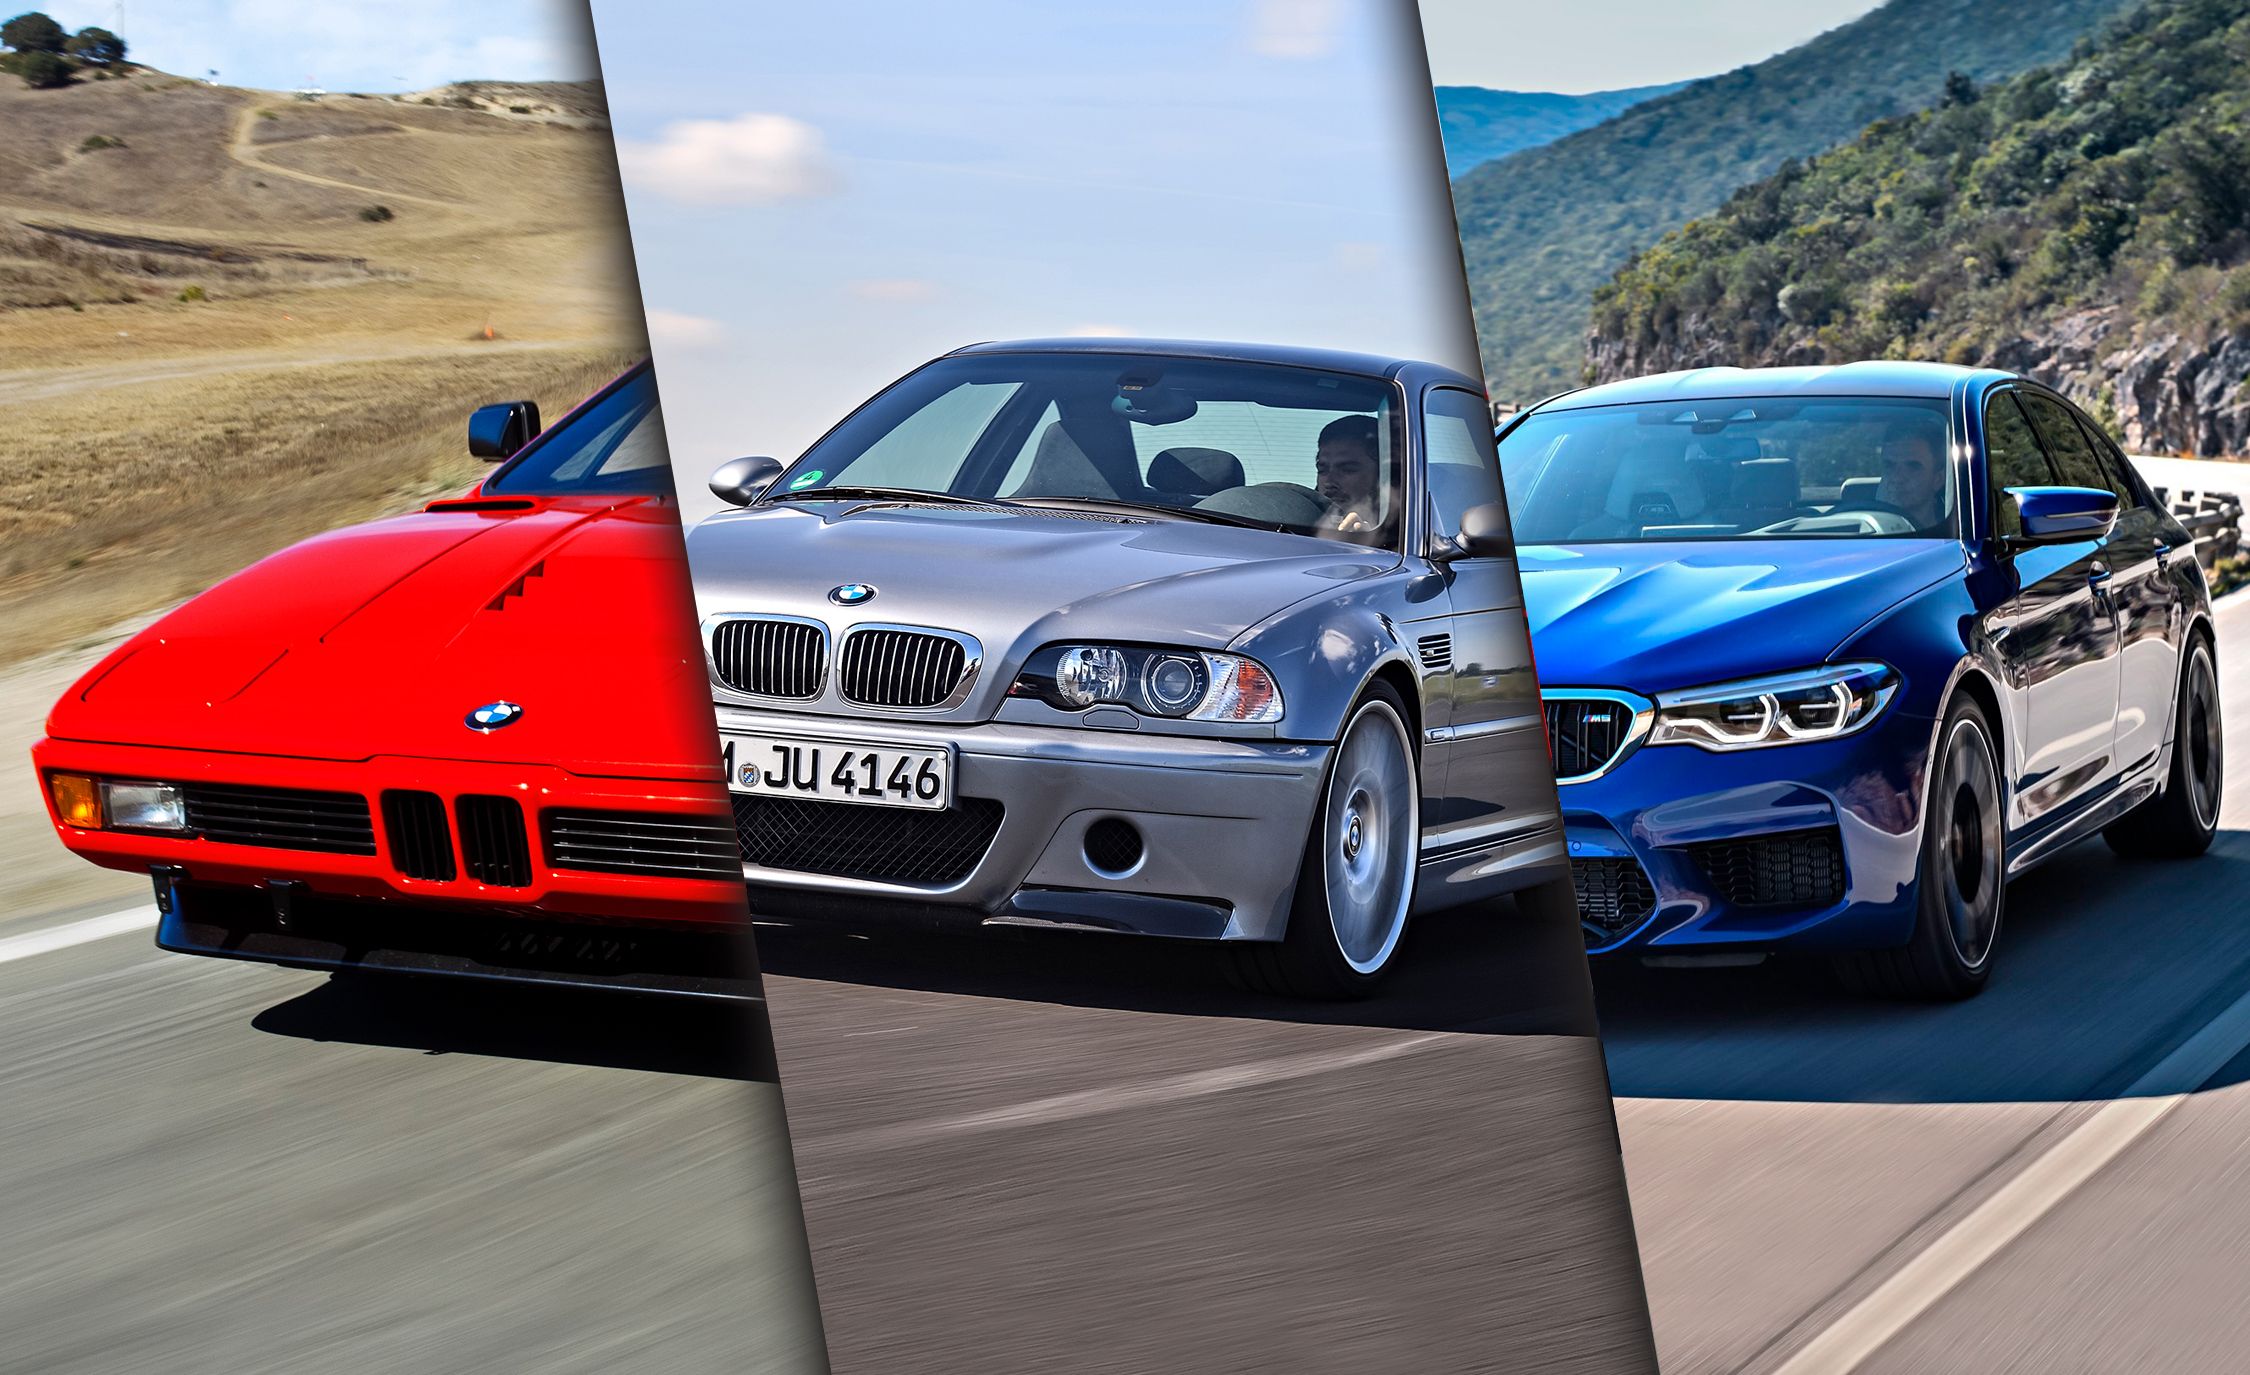 BMW M Cars get tri-turbo diesel | Top Gear